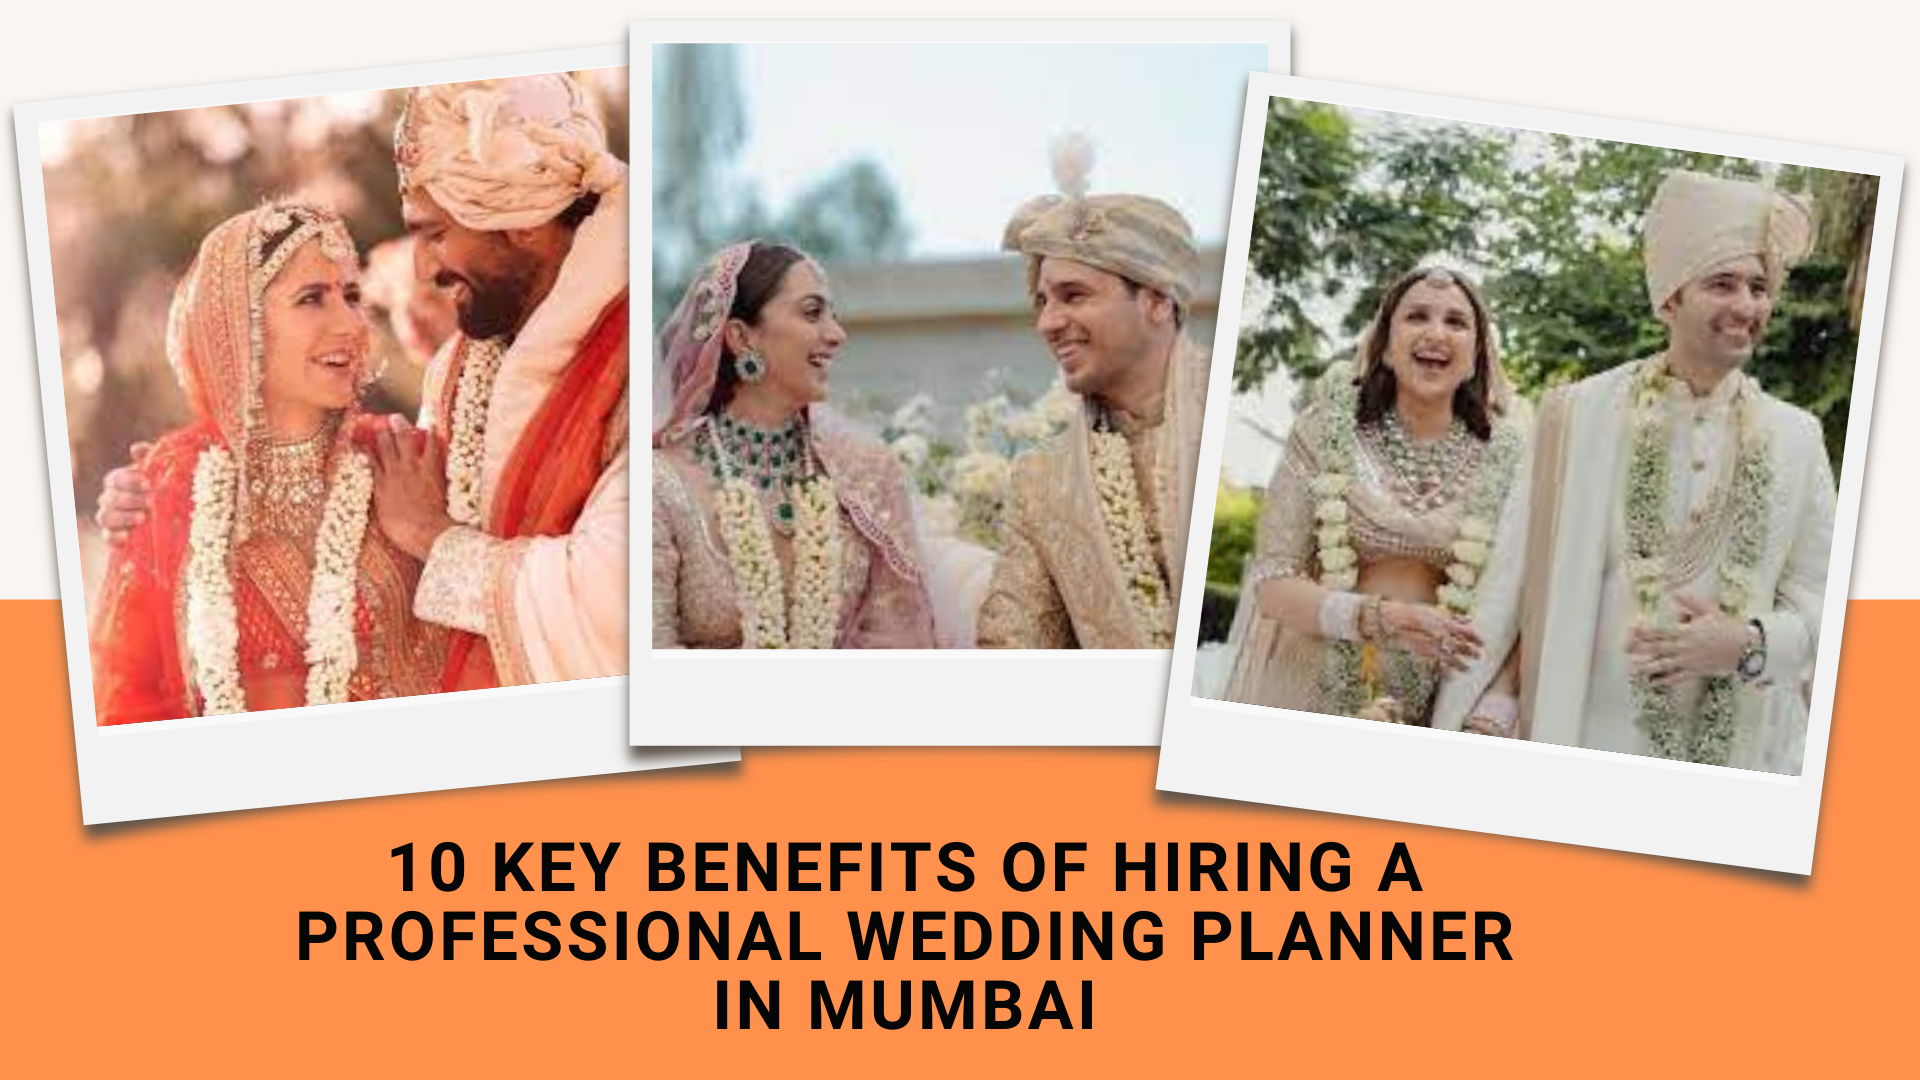 Wedding planner in Mumbai